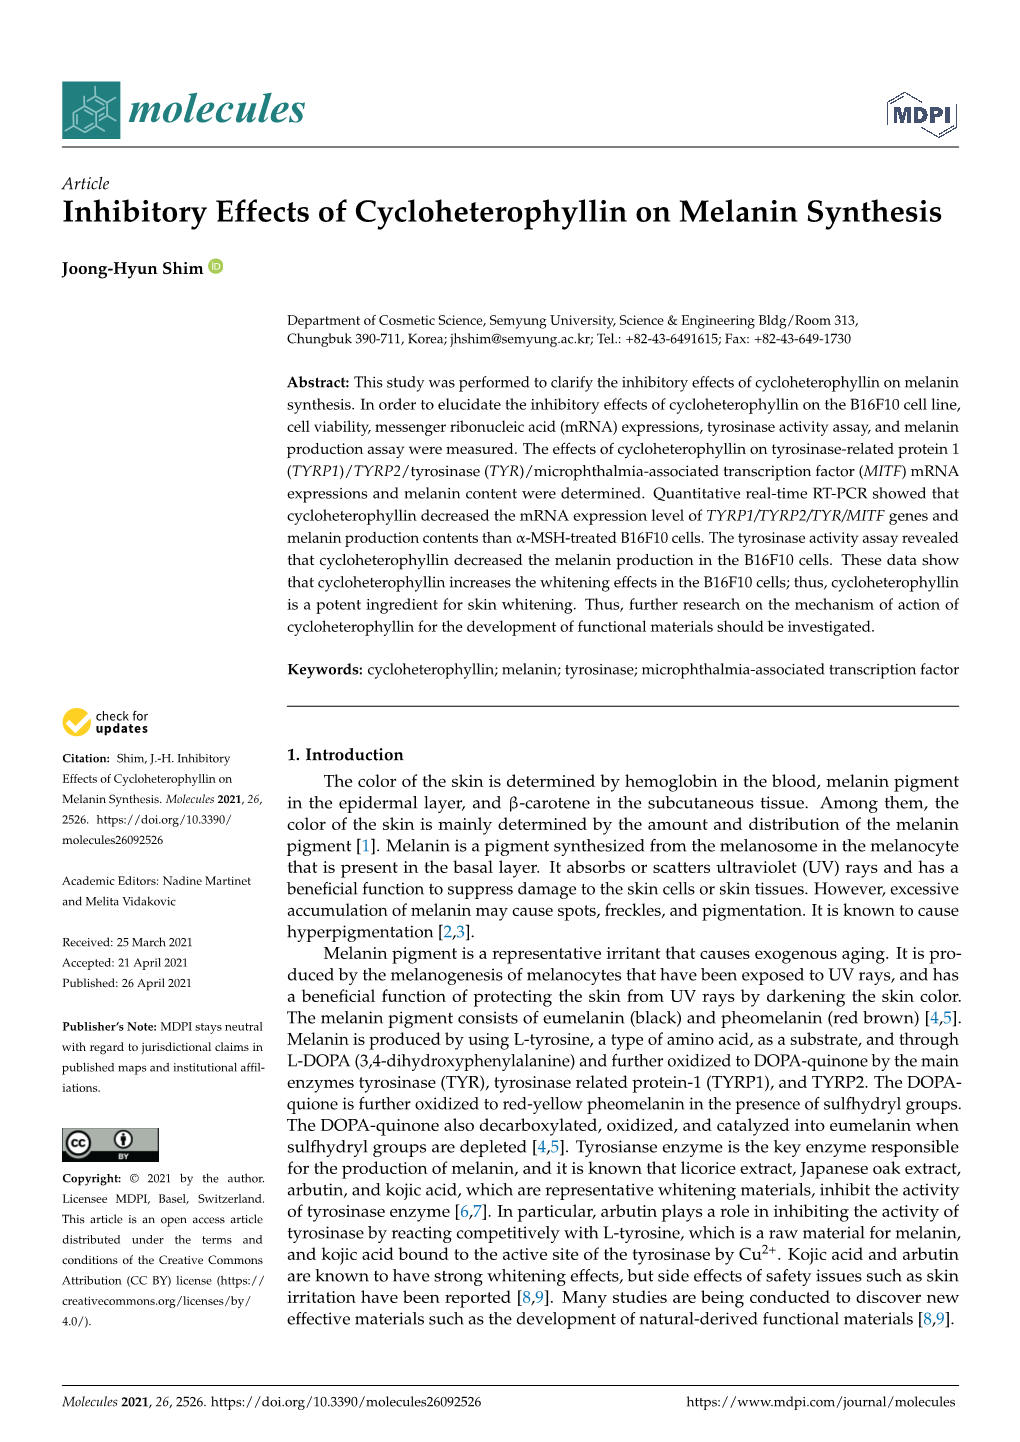 Inhibitory Effects of Cycloheterophyllin on Melanin Synthesis